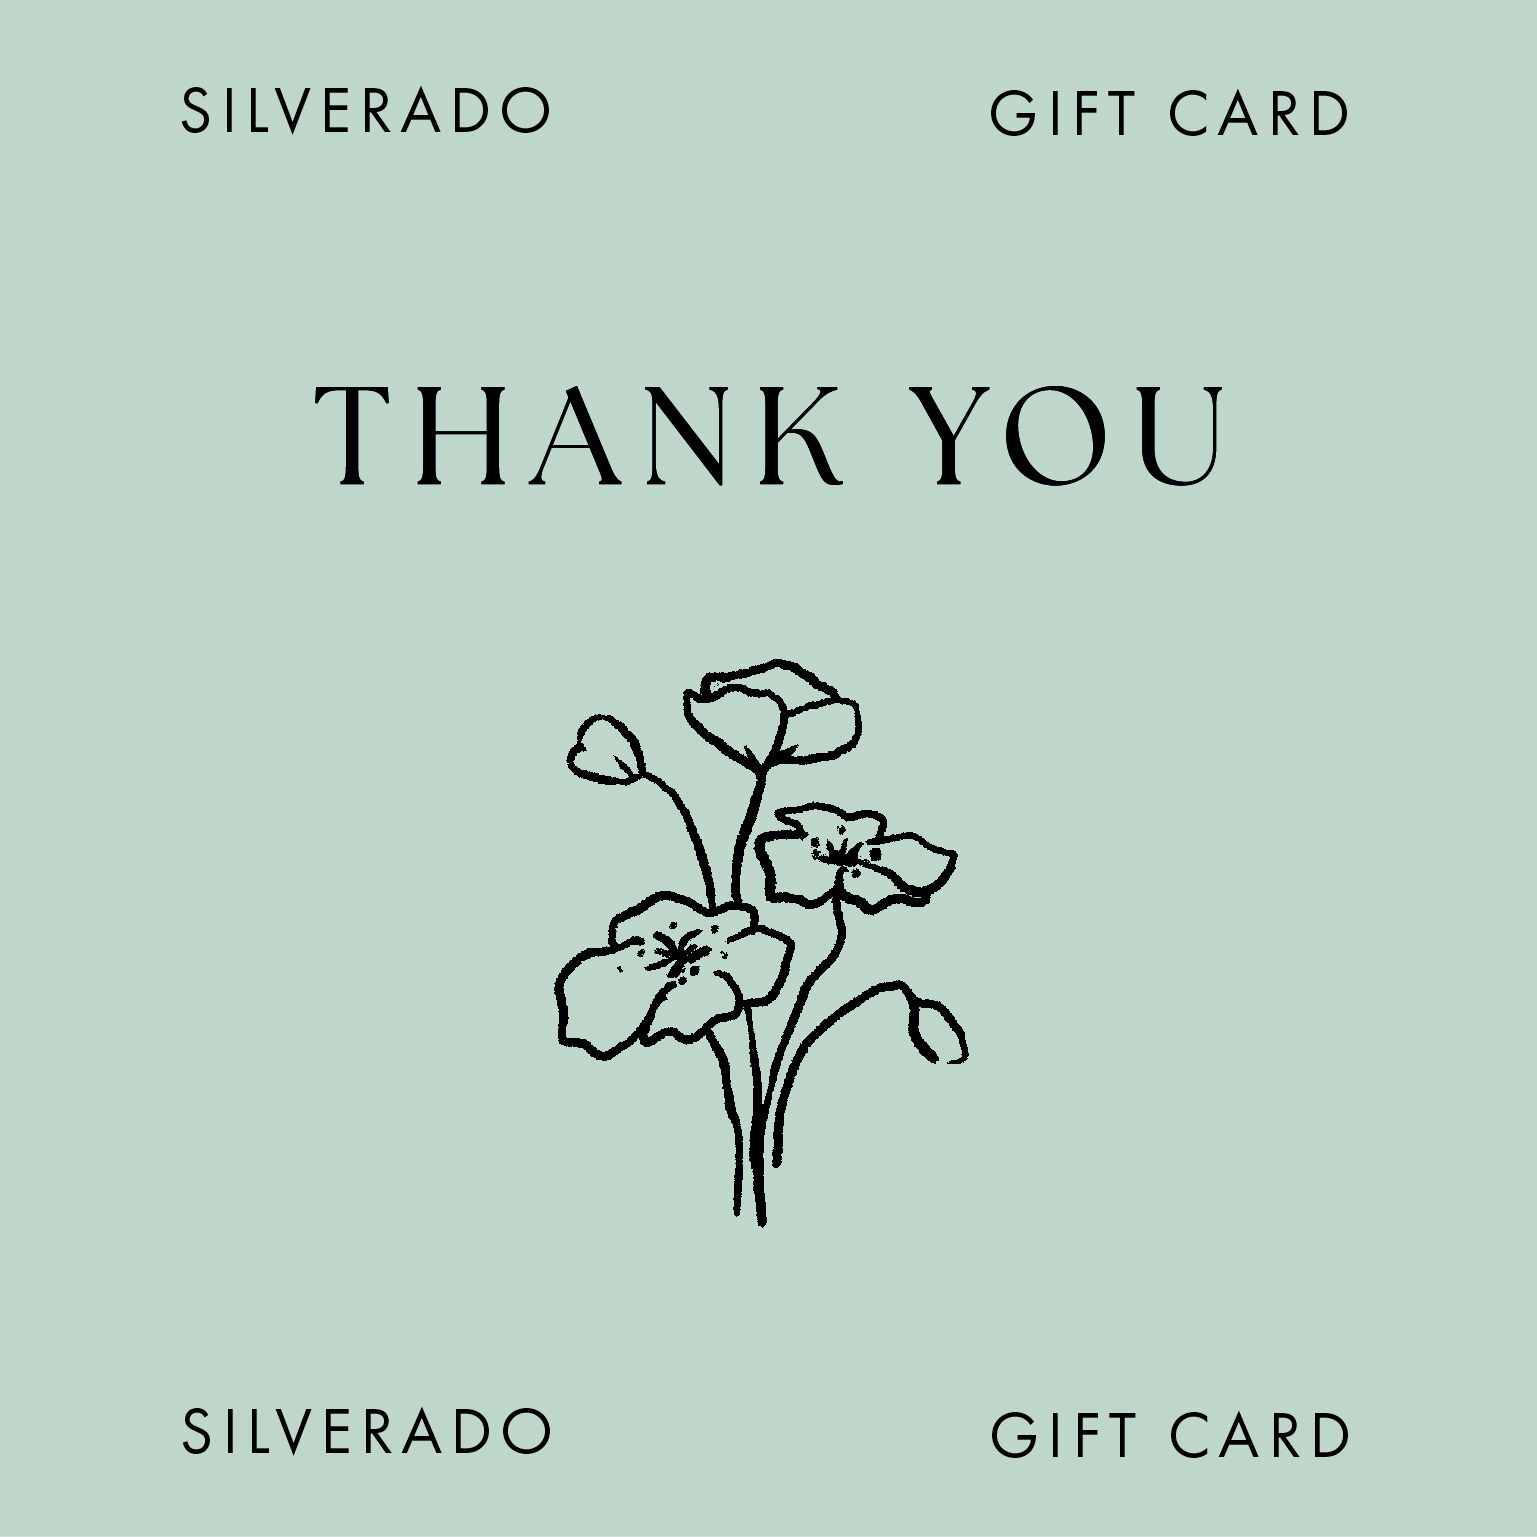 Thank you Gift Card - Silverado Jewellery